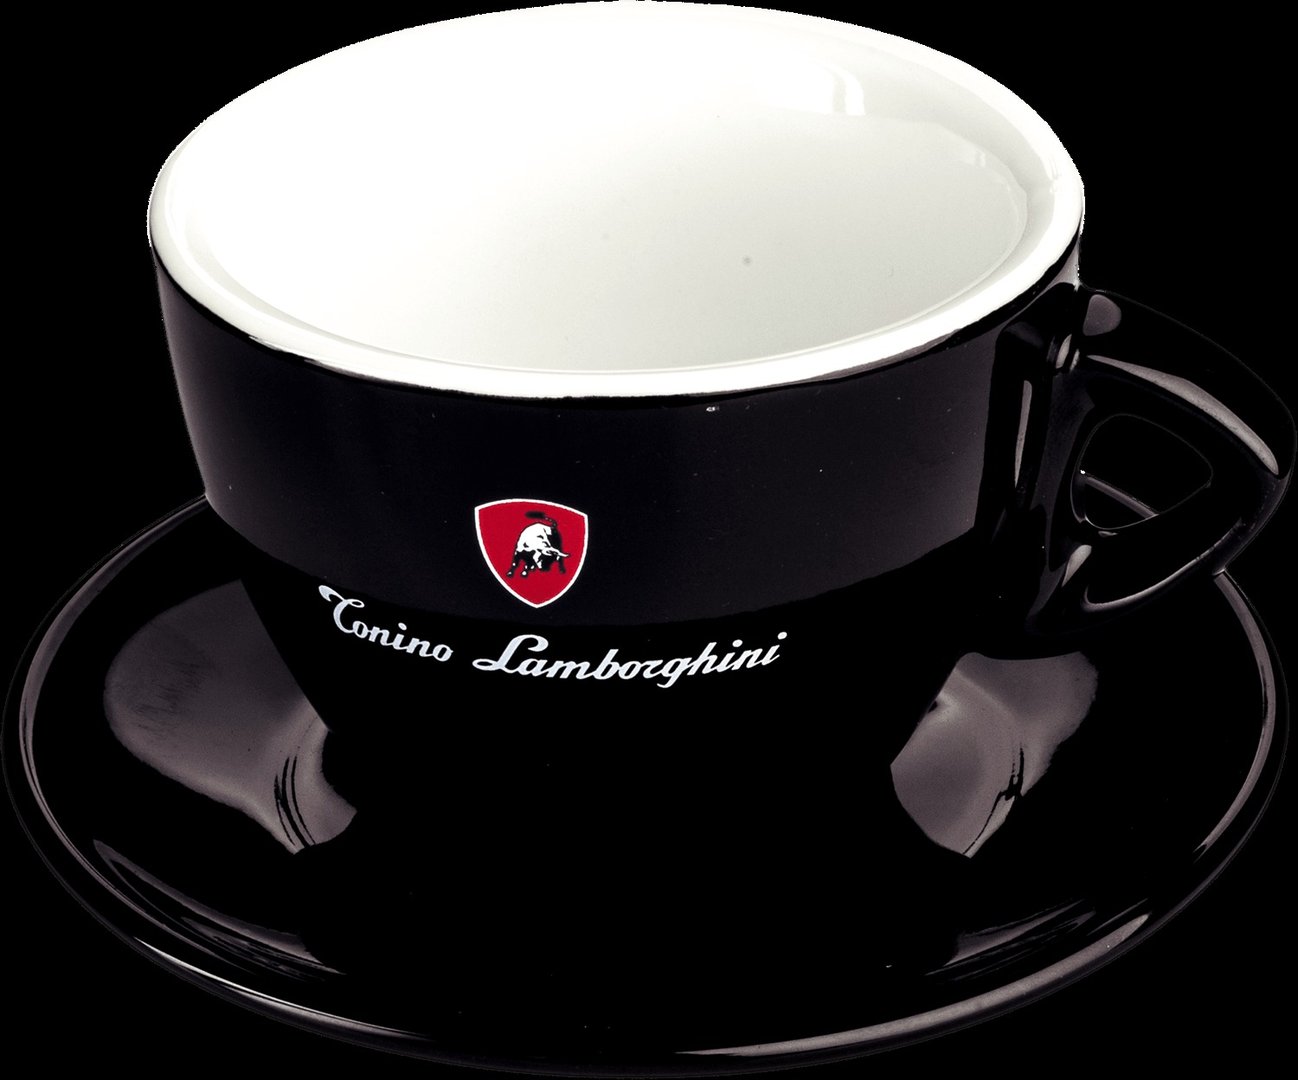 Tonino Lamborghini Milchkaffee Tasse Weiss